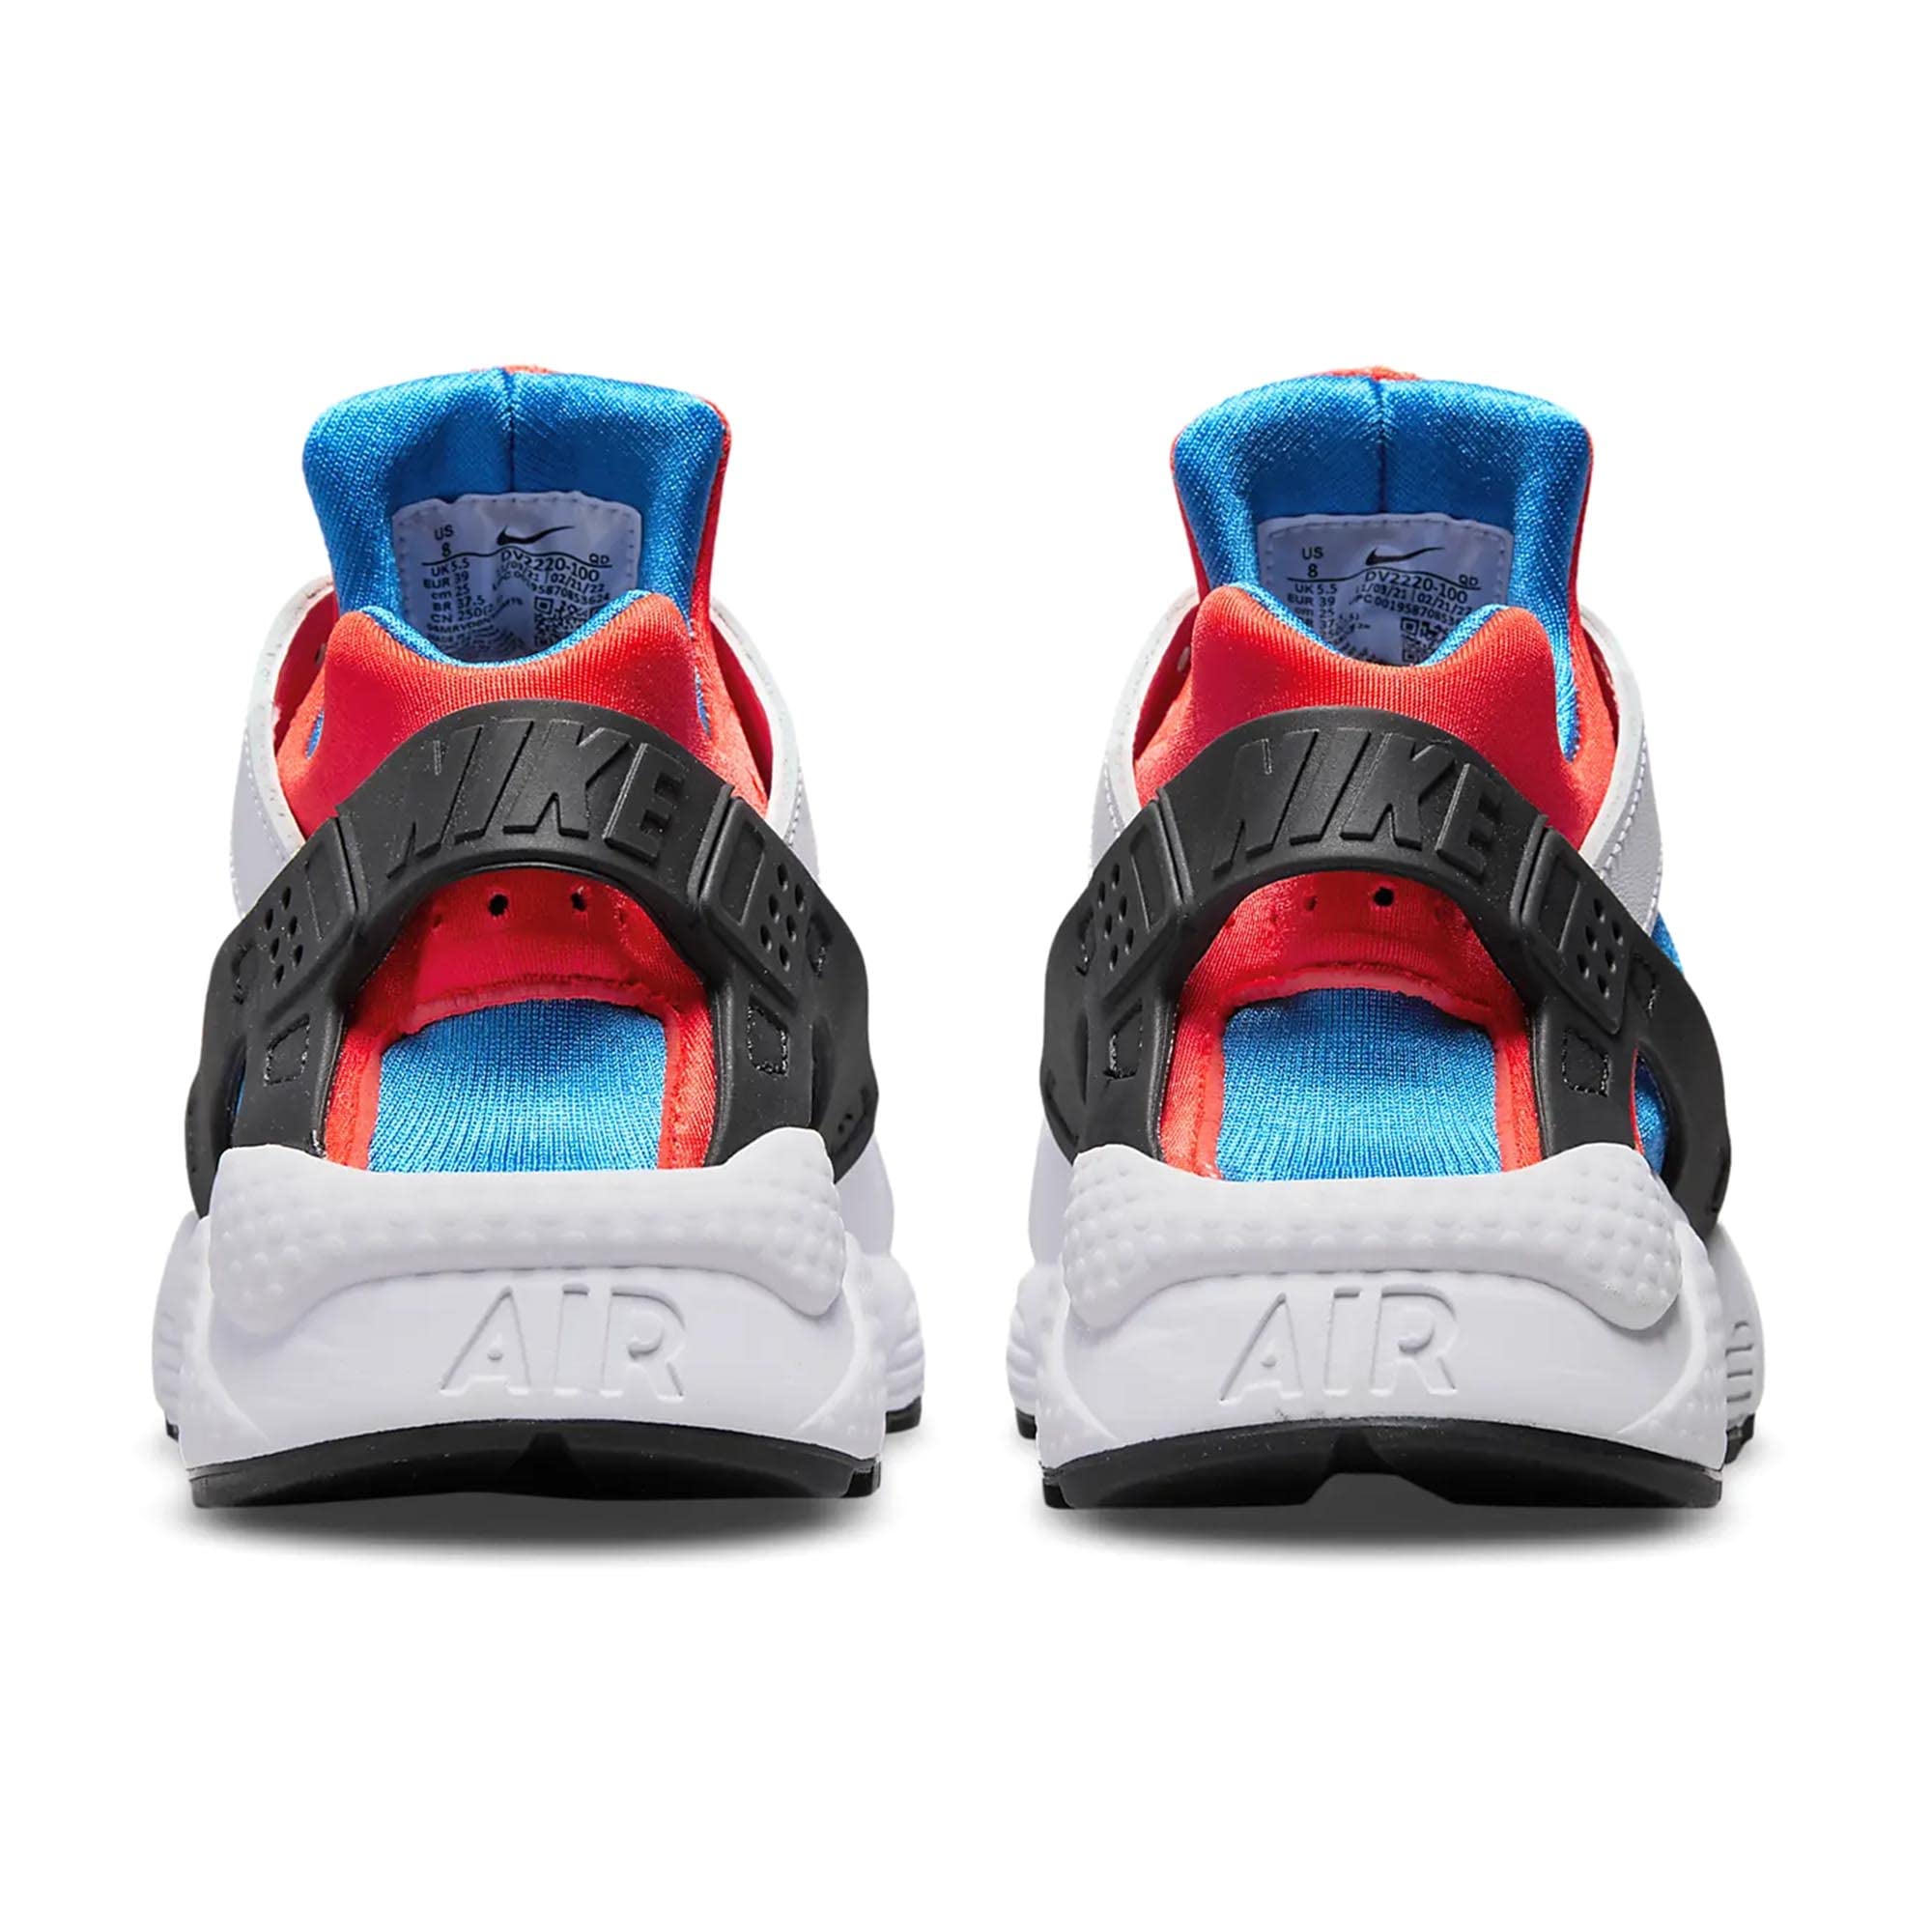 Nike Women's Air Huarache Running Shoe, White/Black/Bright Crimson, 7 US